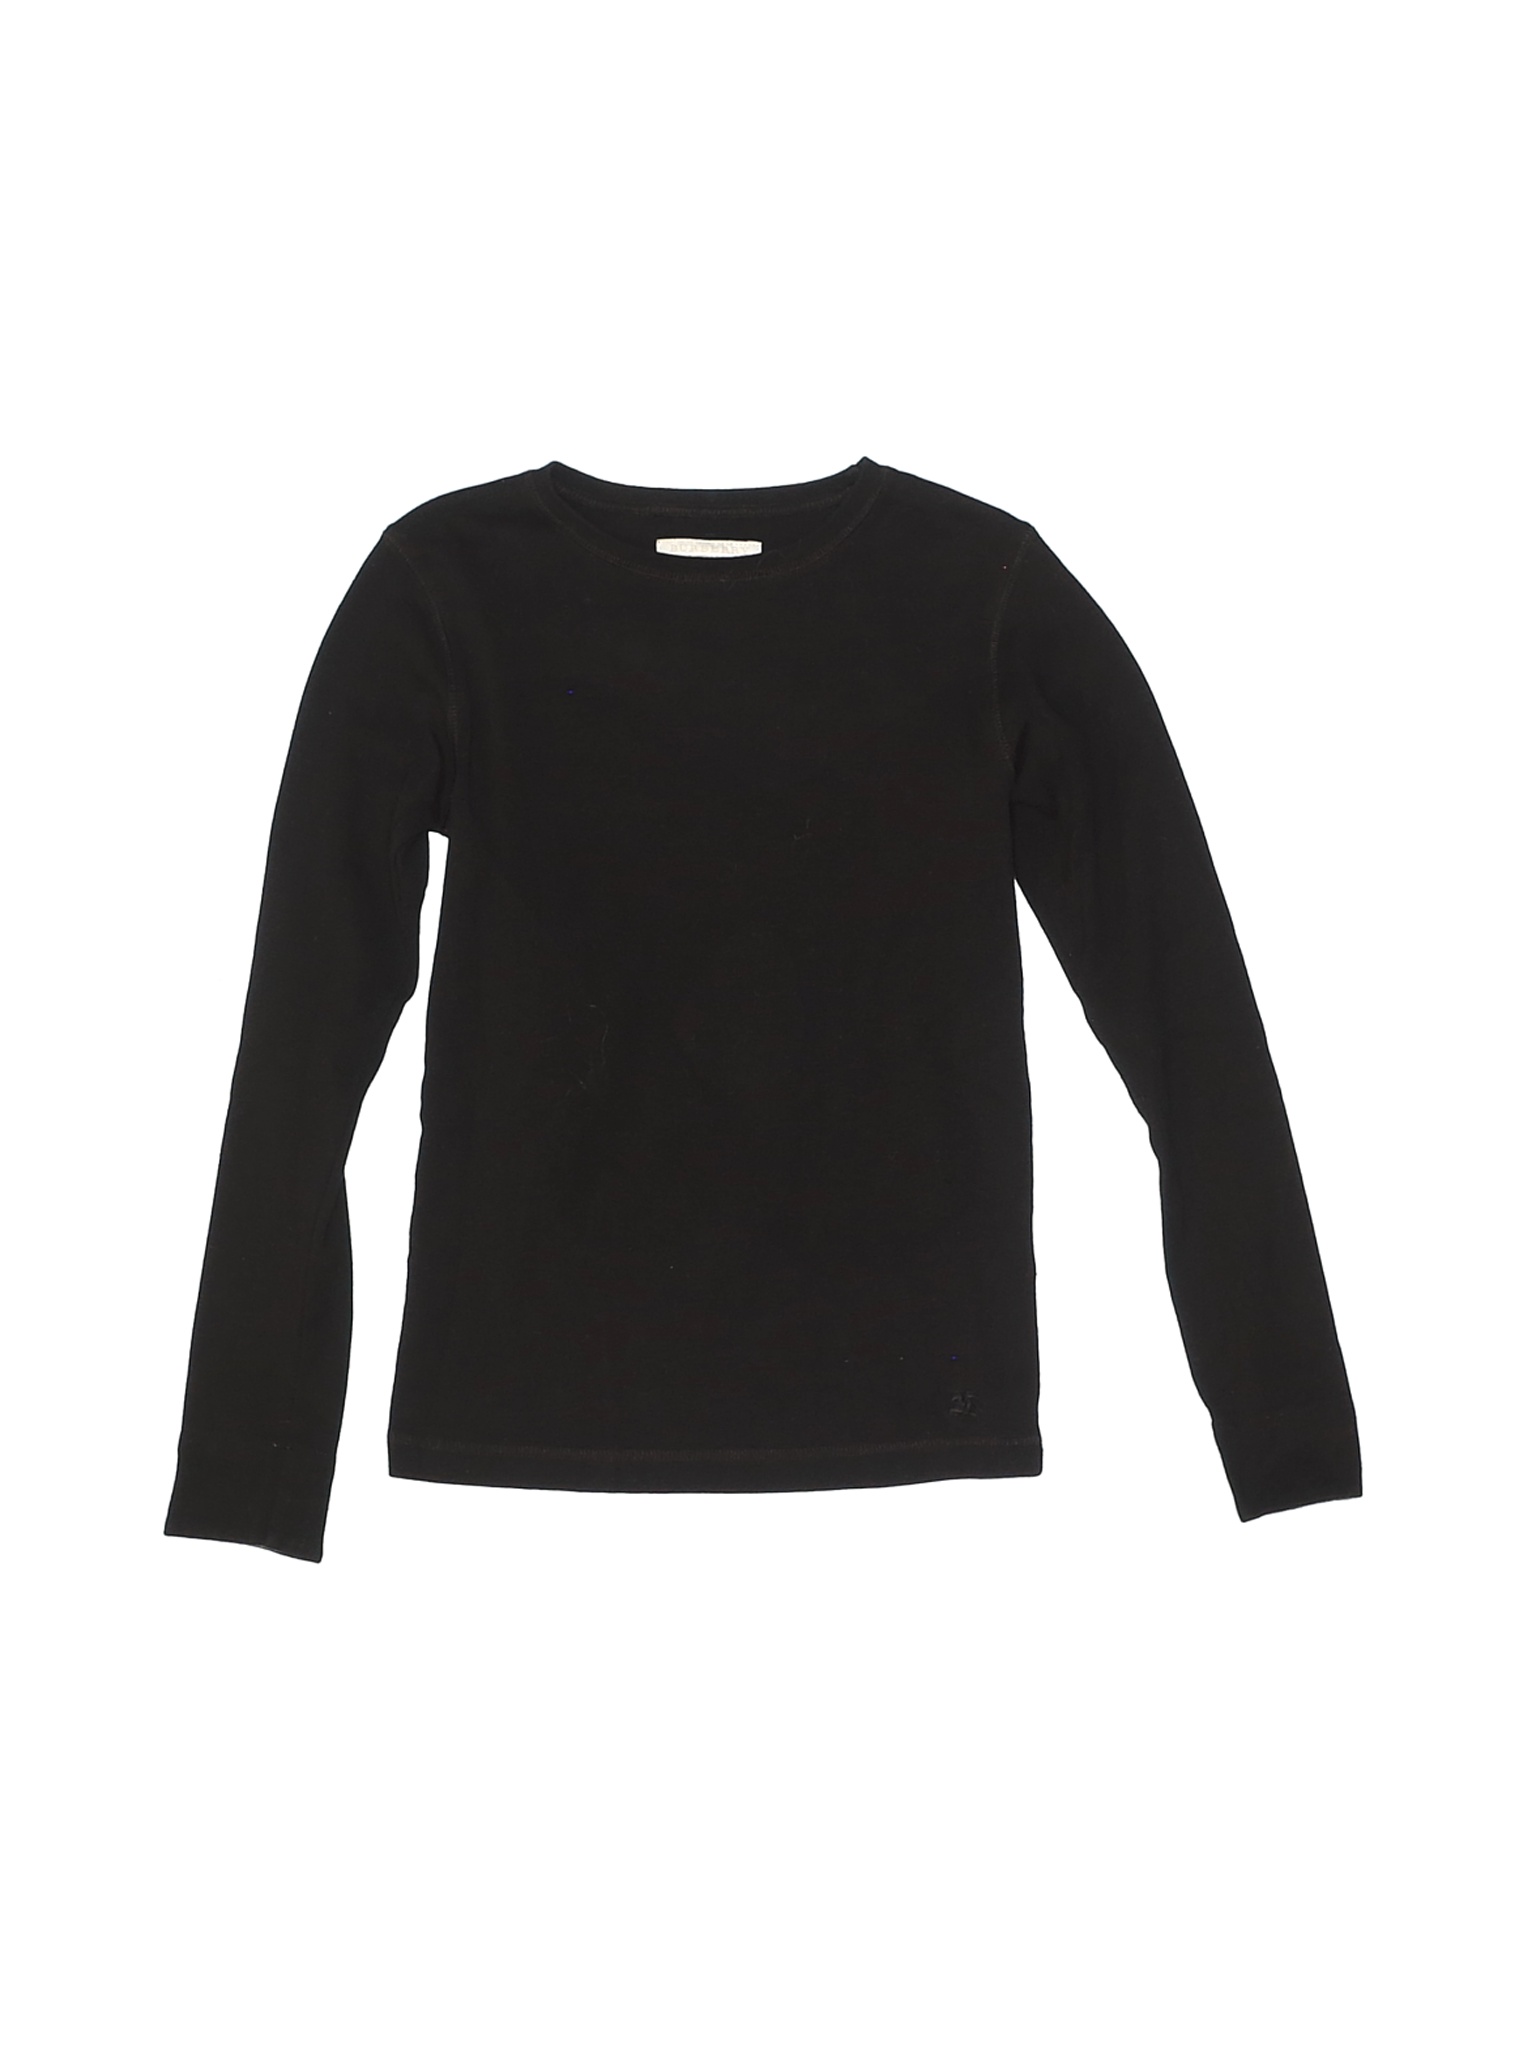 Burberry Boys Black Long Sleeve T-Shirt 10 | eBay